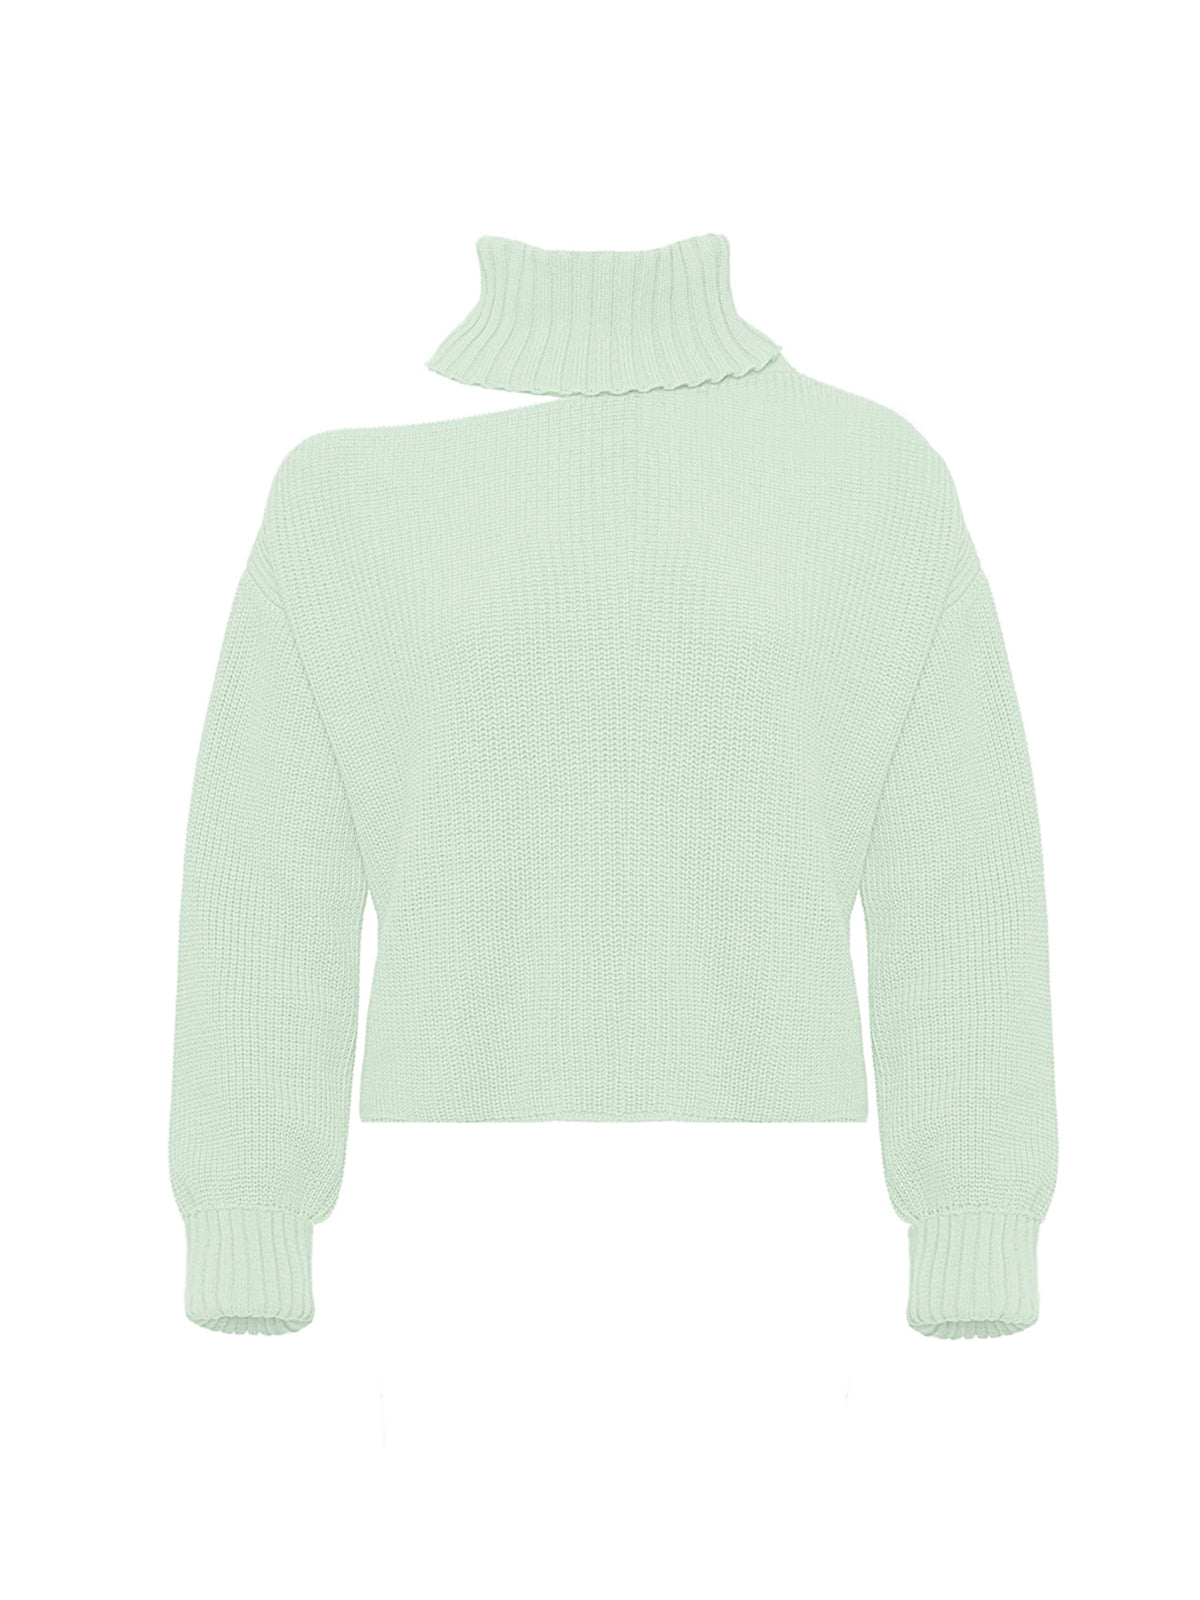 VALI sweater - celadon